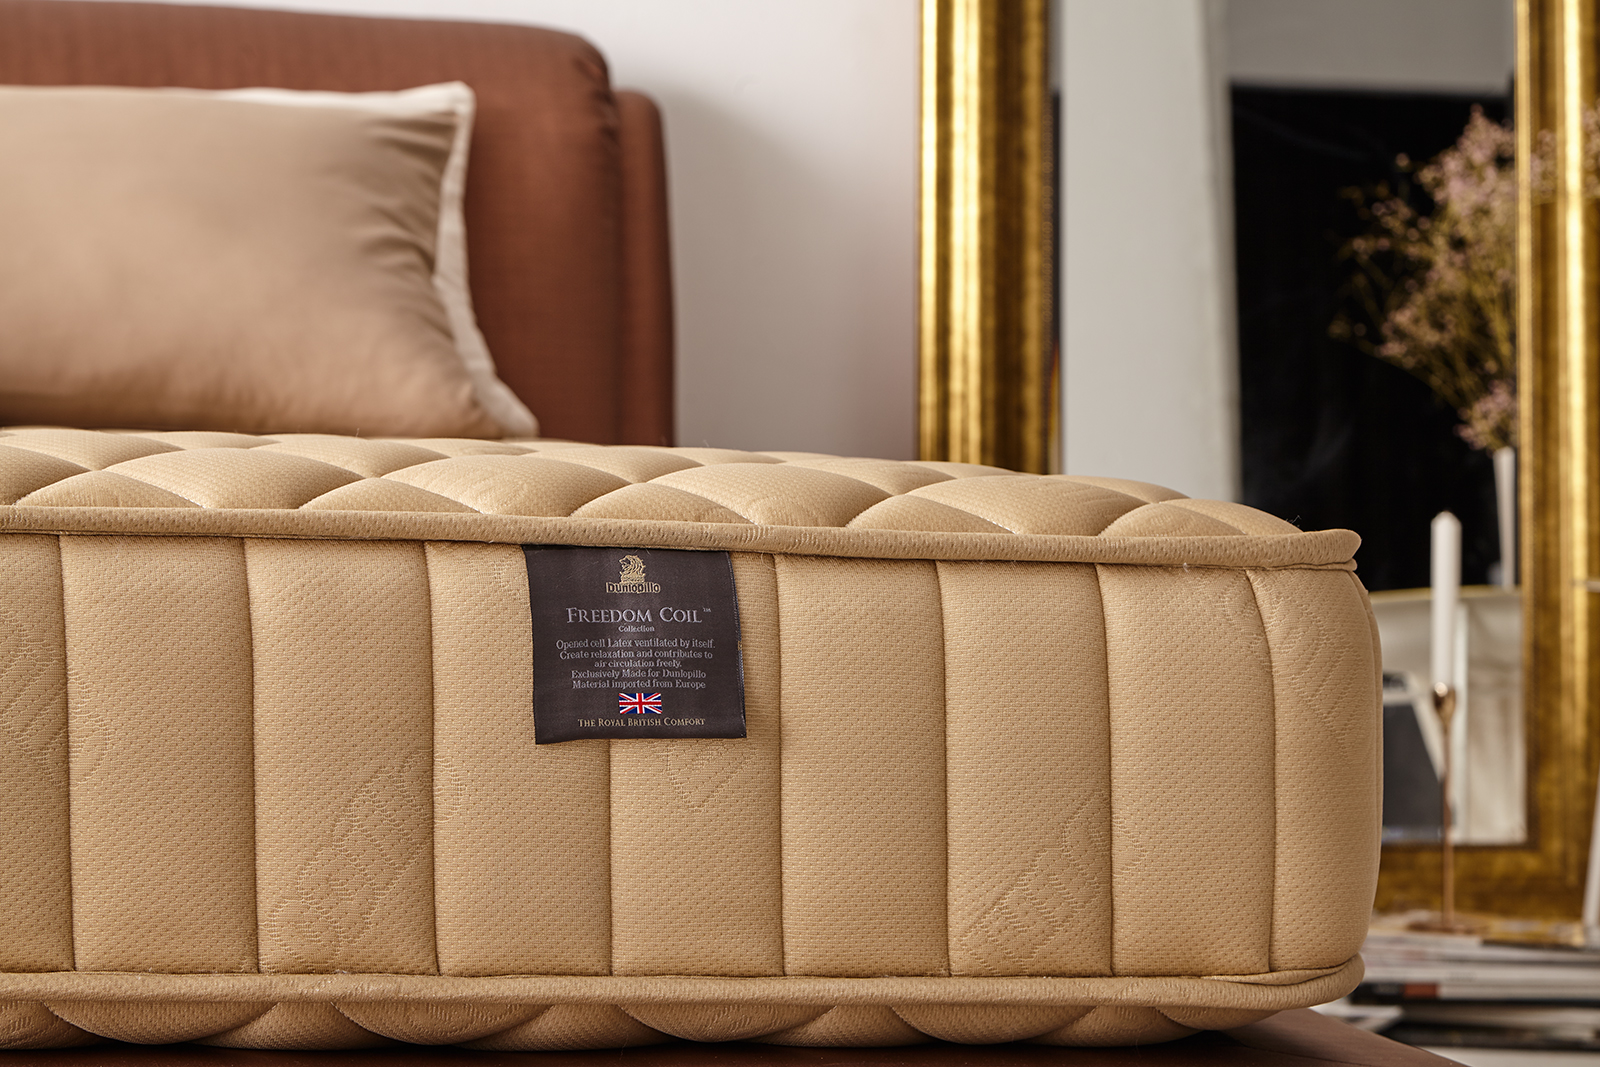 dunlopillo mattress protector review